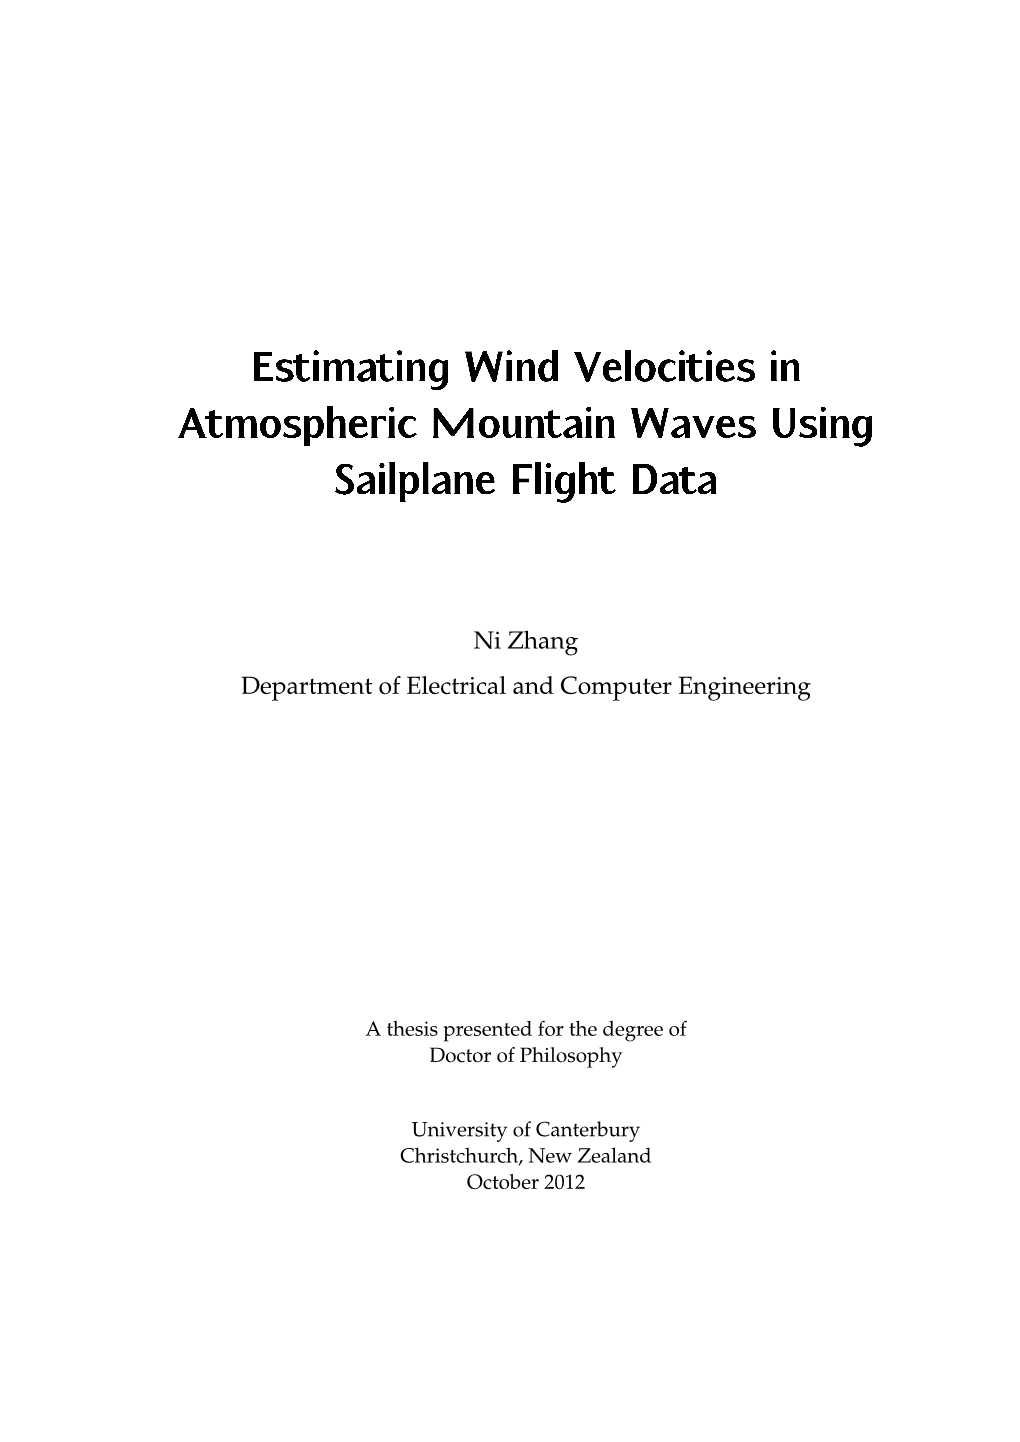 Estimating Wind Velocities in Atmospheric Mountain Waves Using Sailplane Flight Data